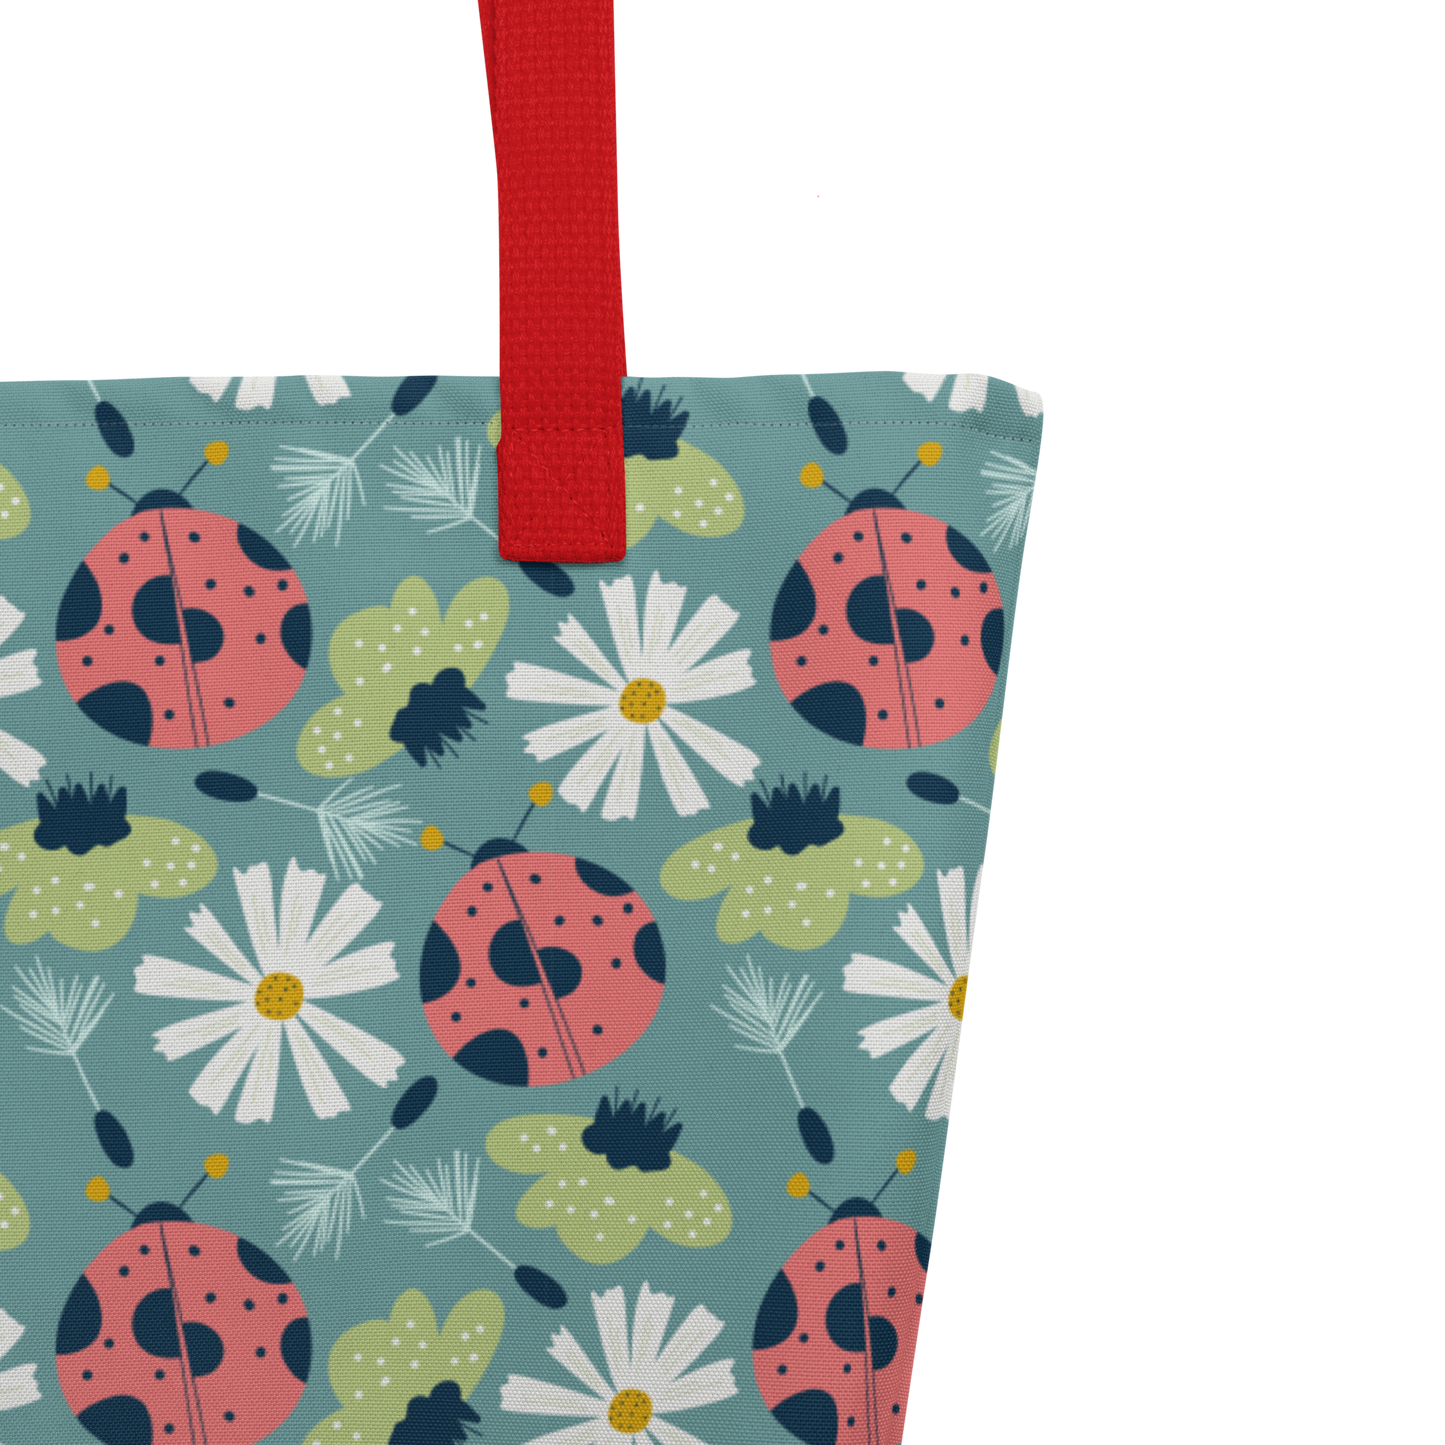 Scandinavian Spring Floral | Seamless Patterns | All-Over Print Large Tote Bag w/ Pocket - #2